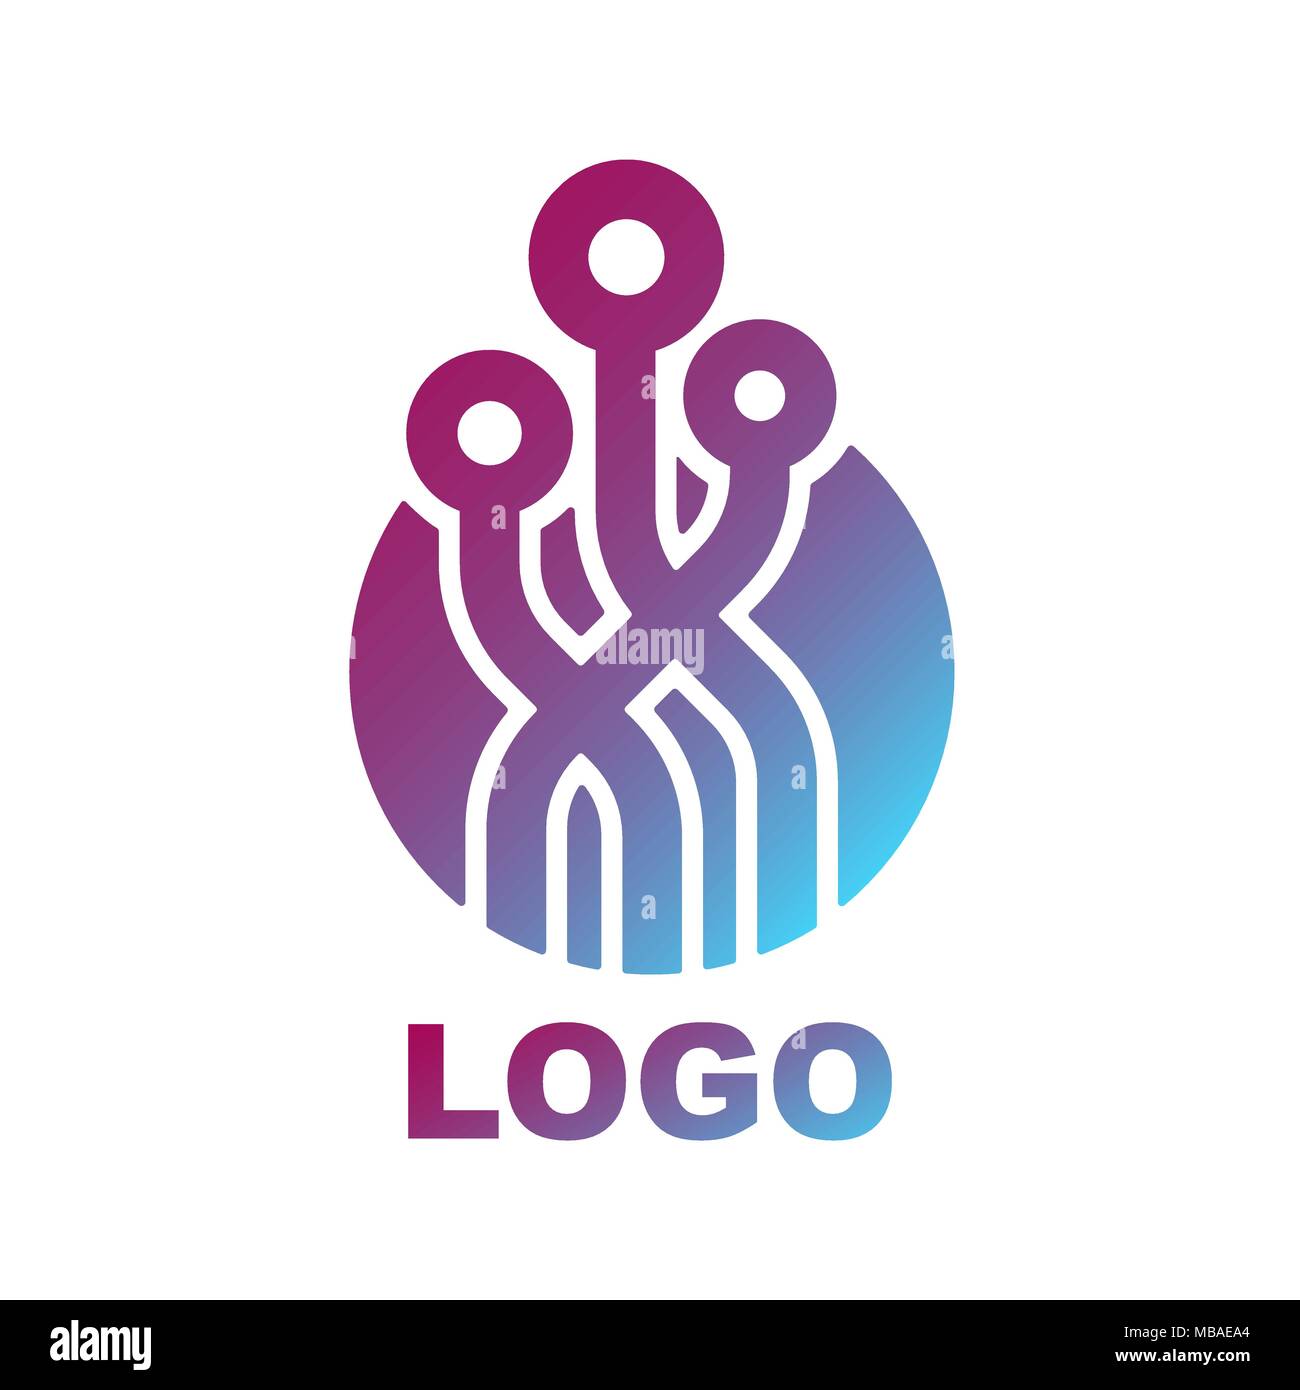 World Tech Logo Design Template. Abstract digital shape concept for modern technologies Stock Vector